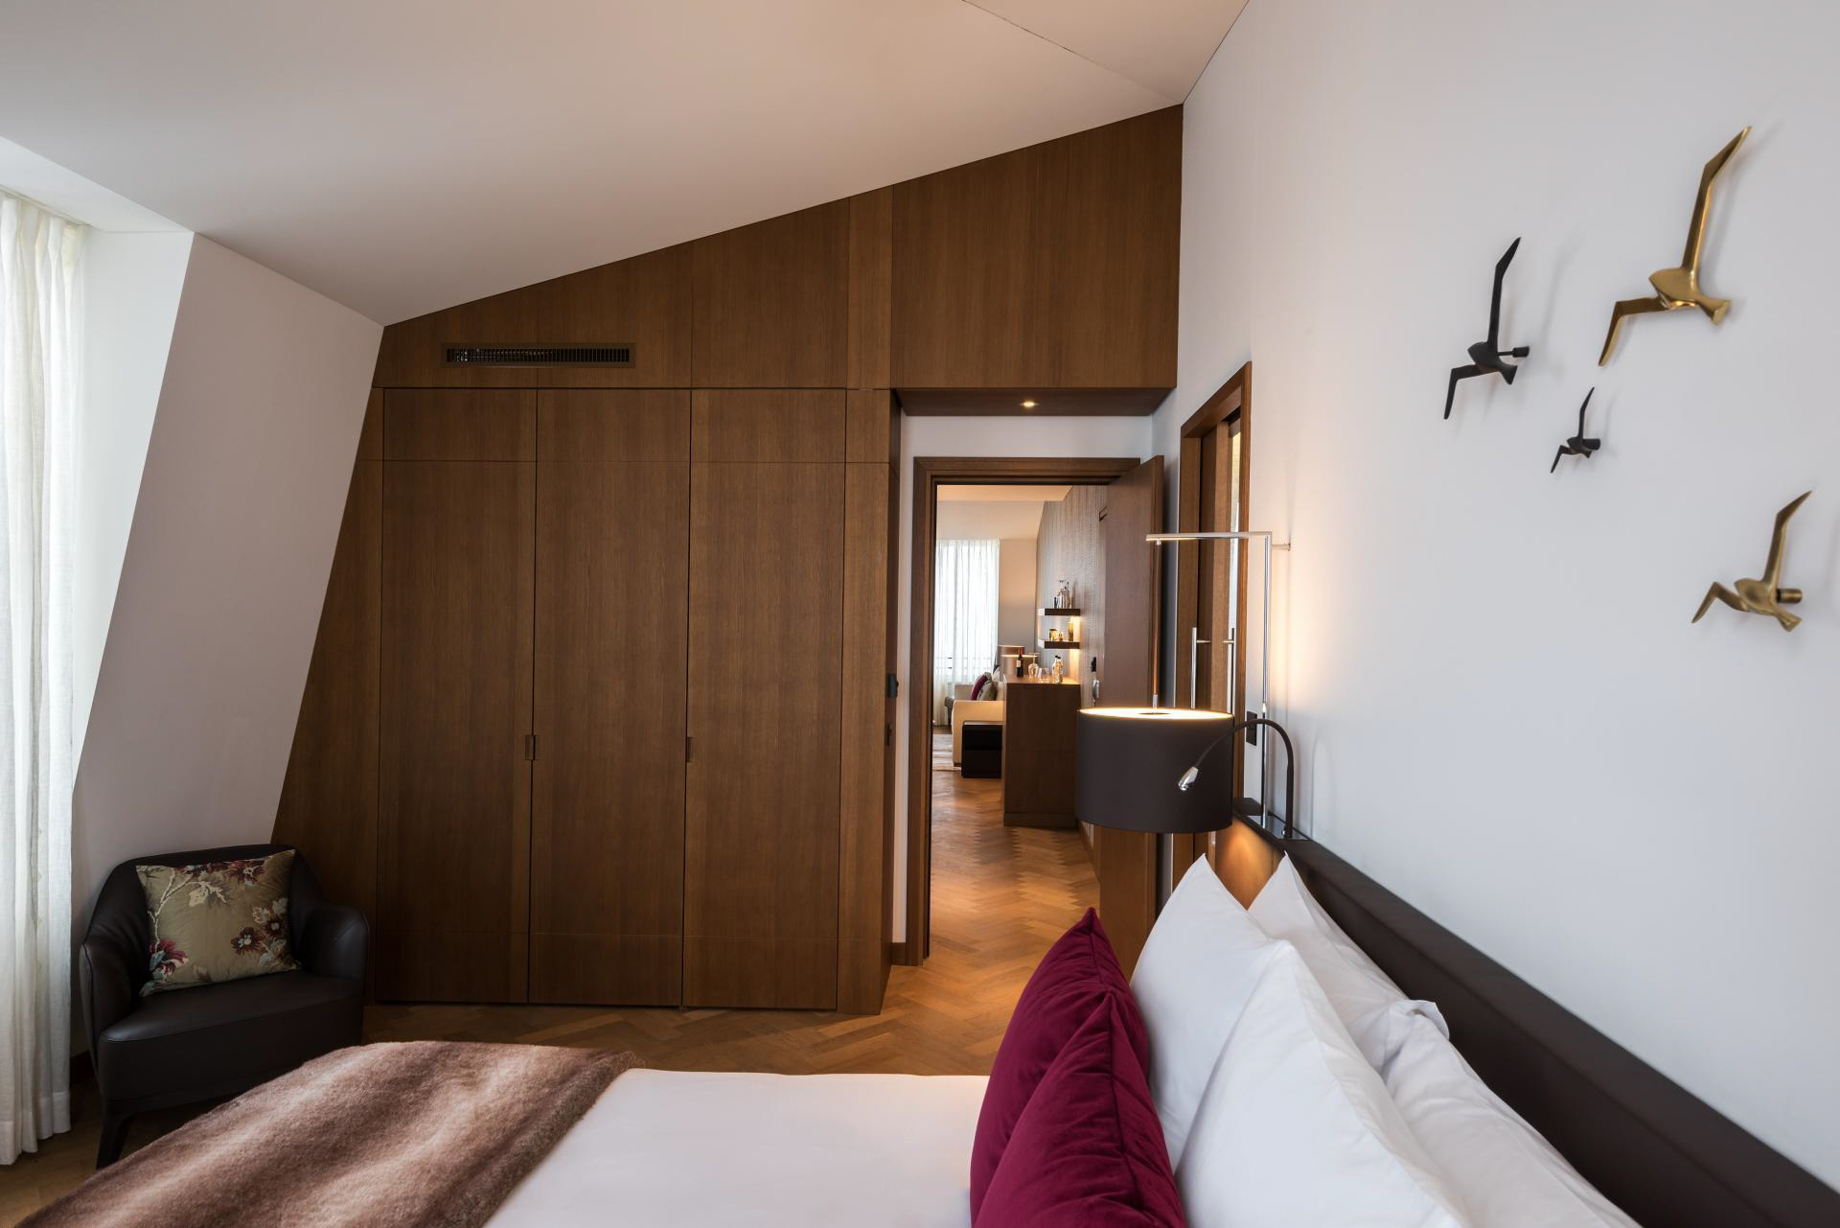 Palace Hotel – Burgenstock Hotels & Resort – Obburgen, Switzerland – Palace Grand Suite Bedroom